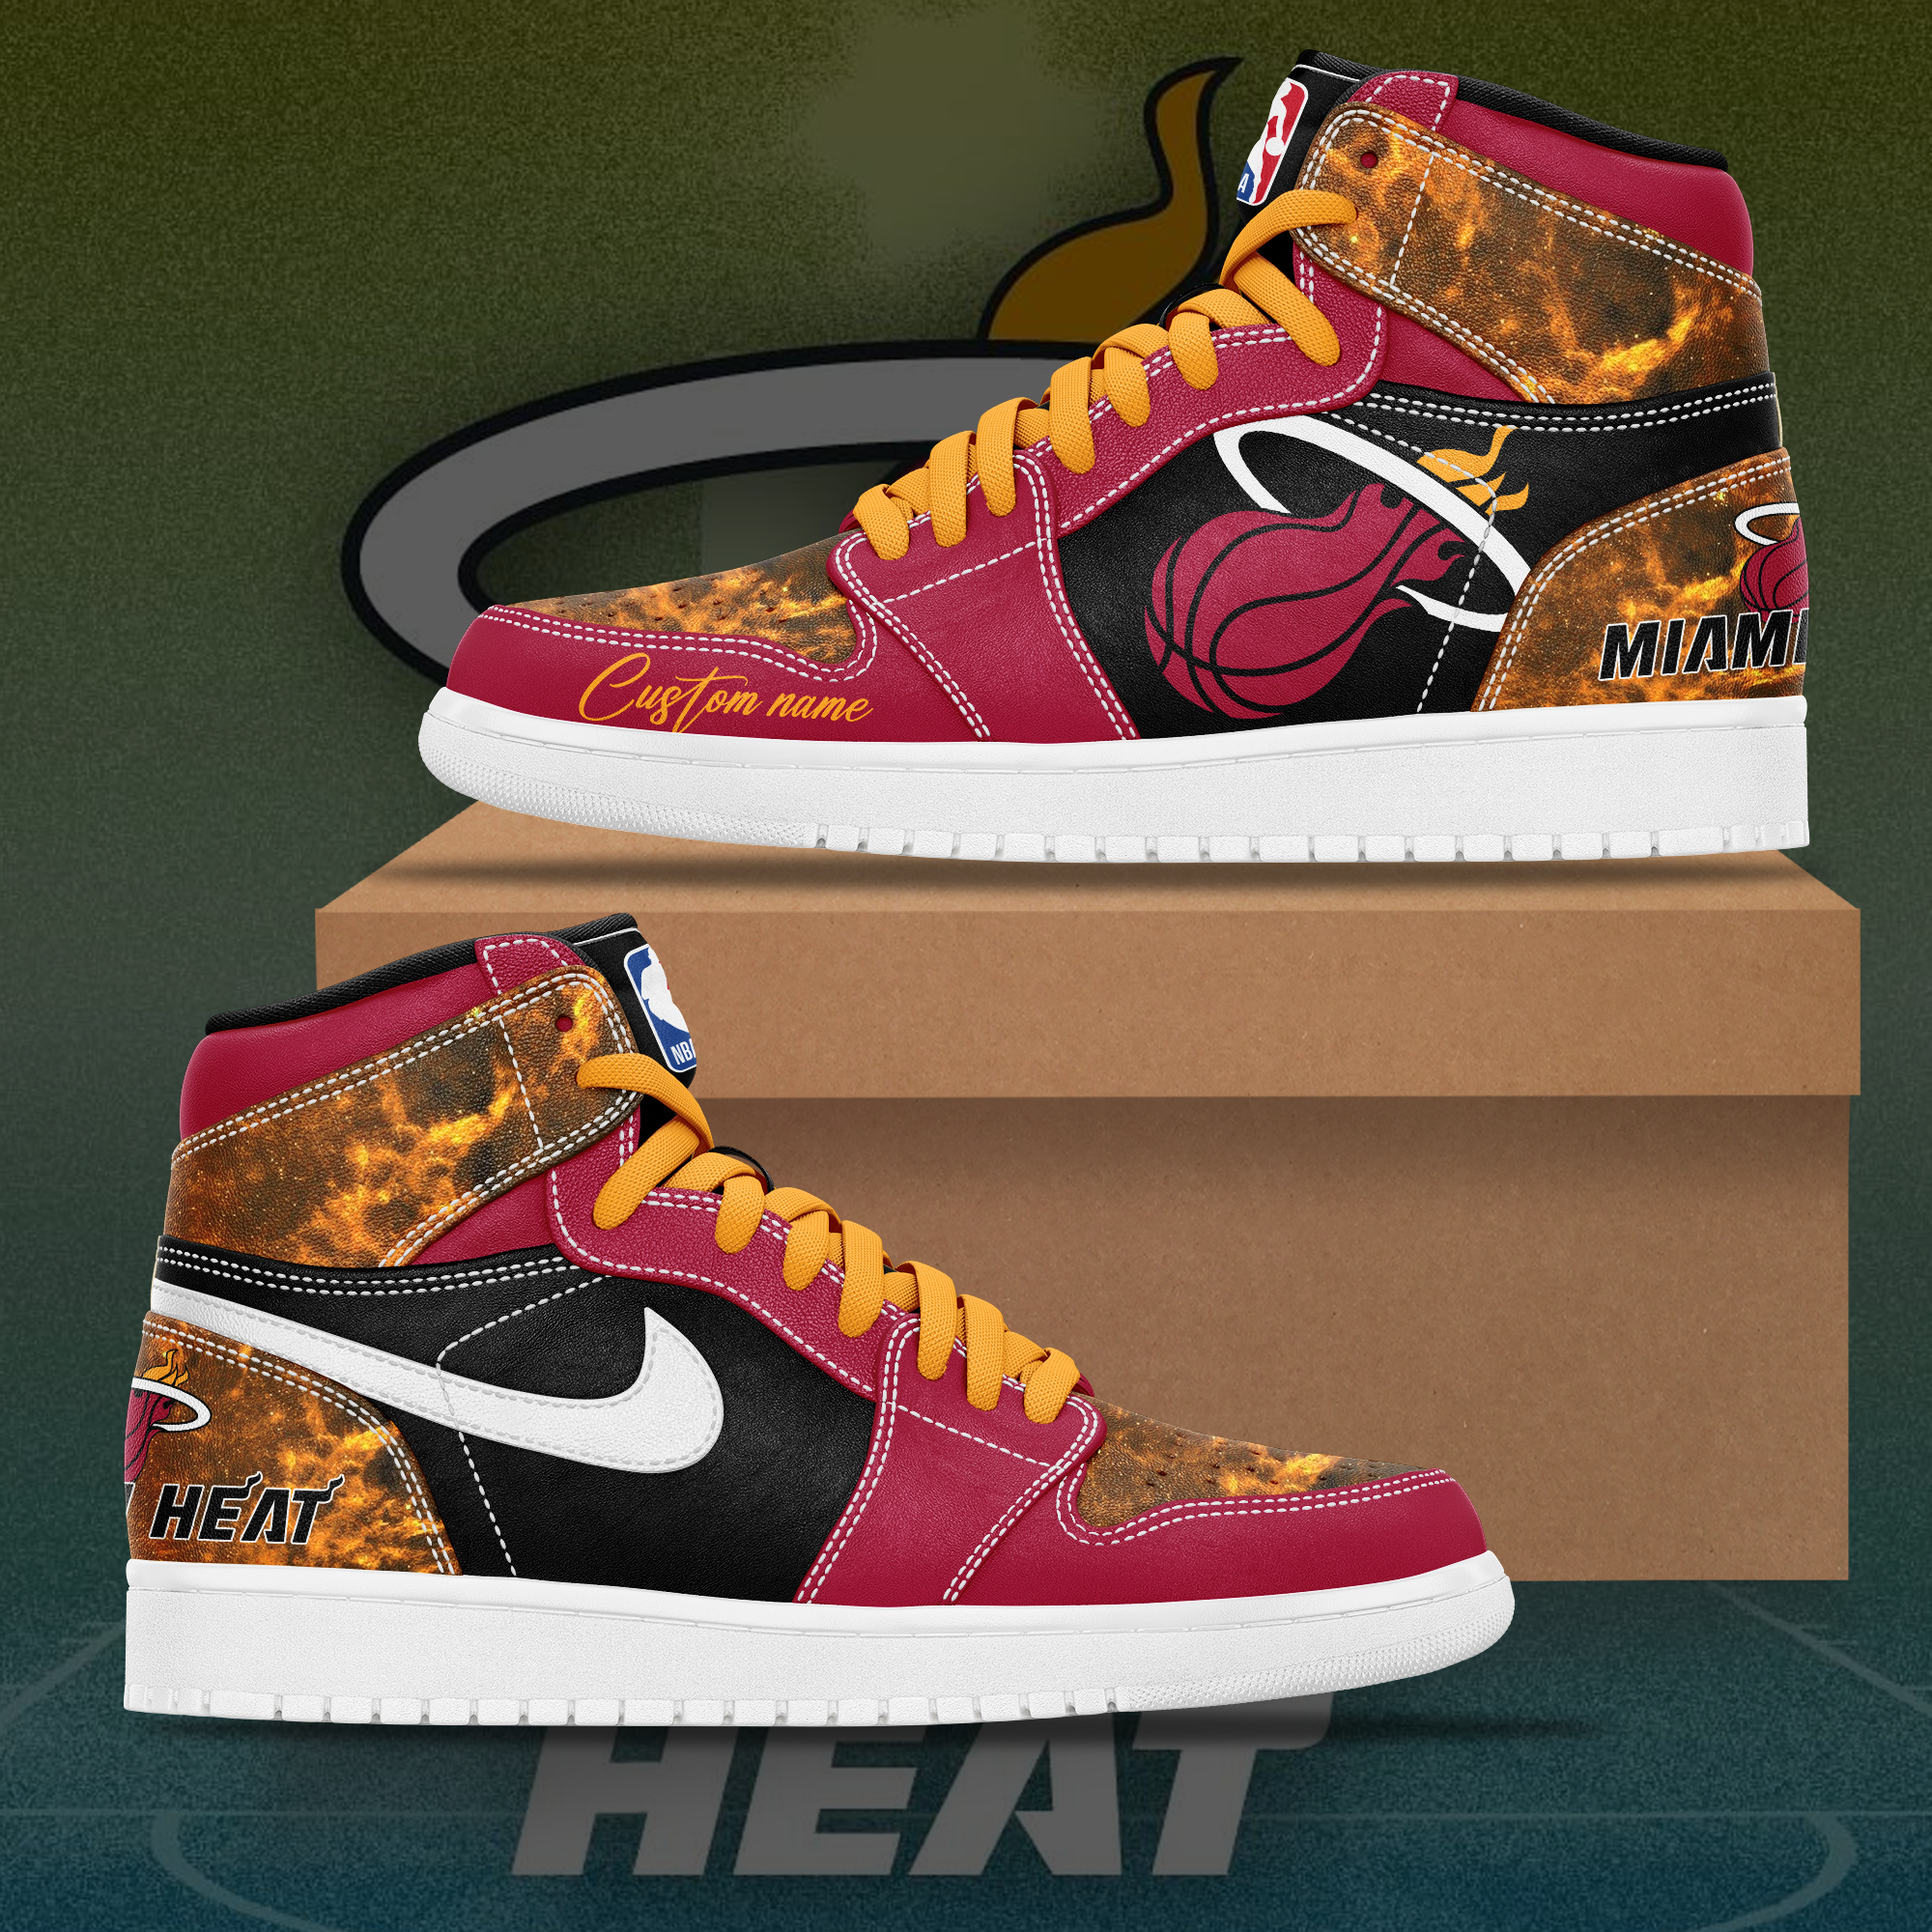 Miami Heat NBA Personalized Air Jordan 1 Shoes - Growkoc